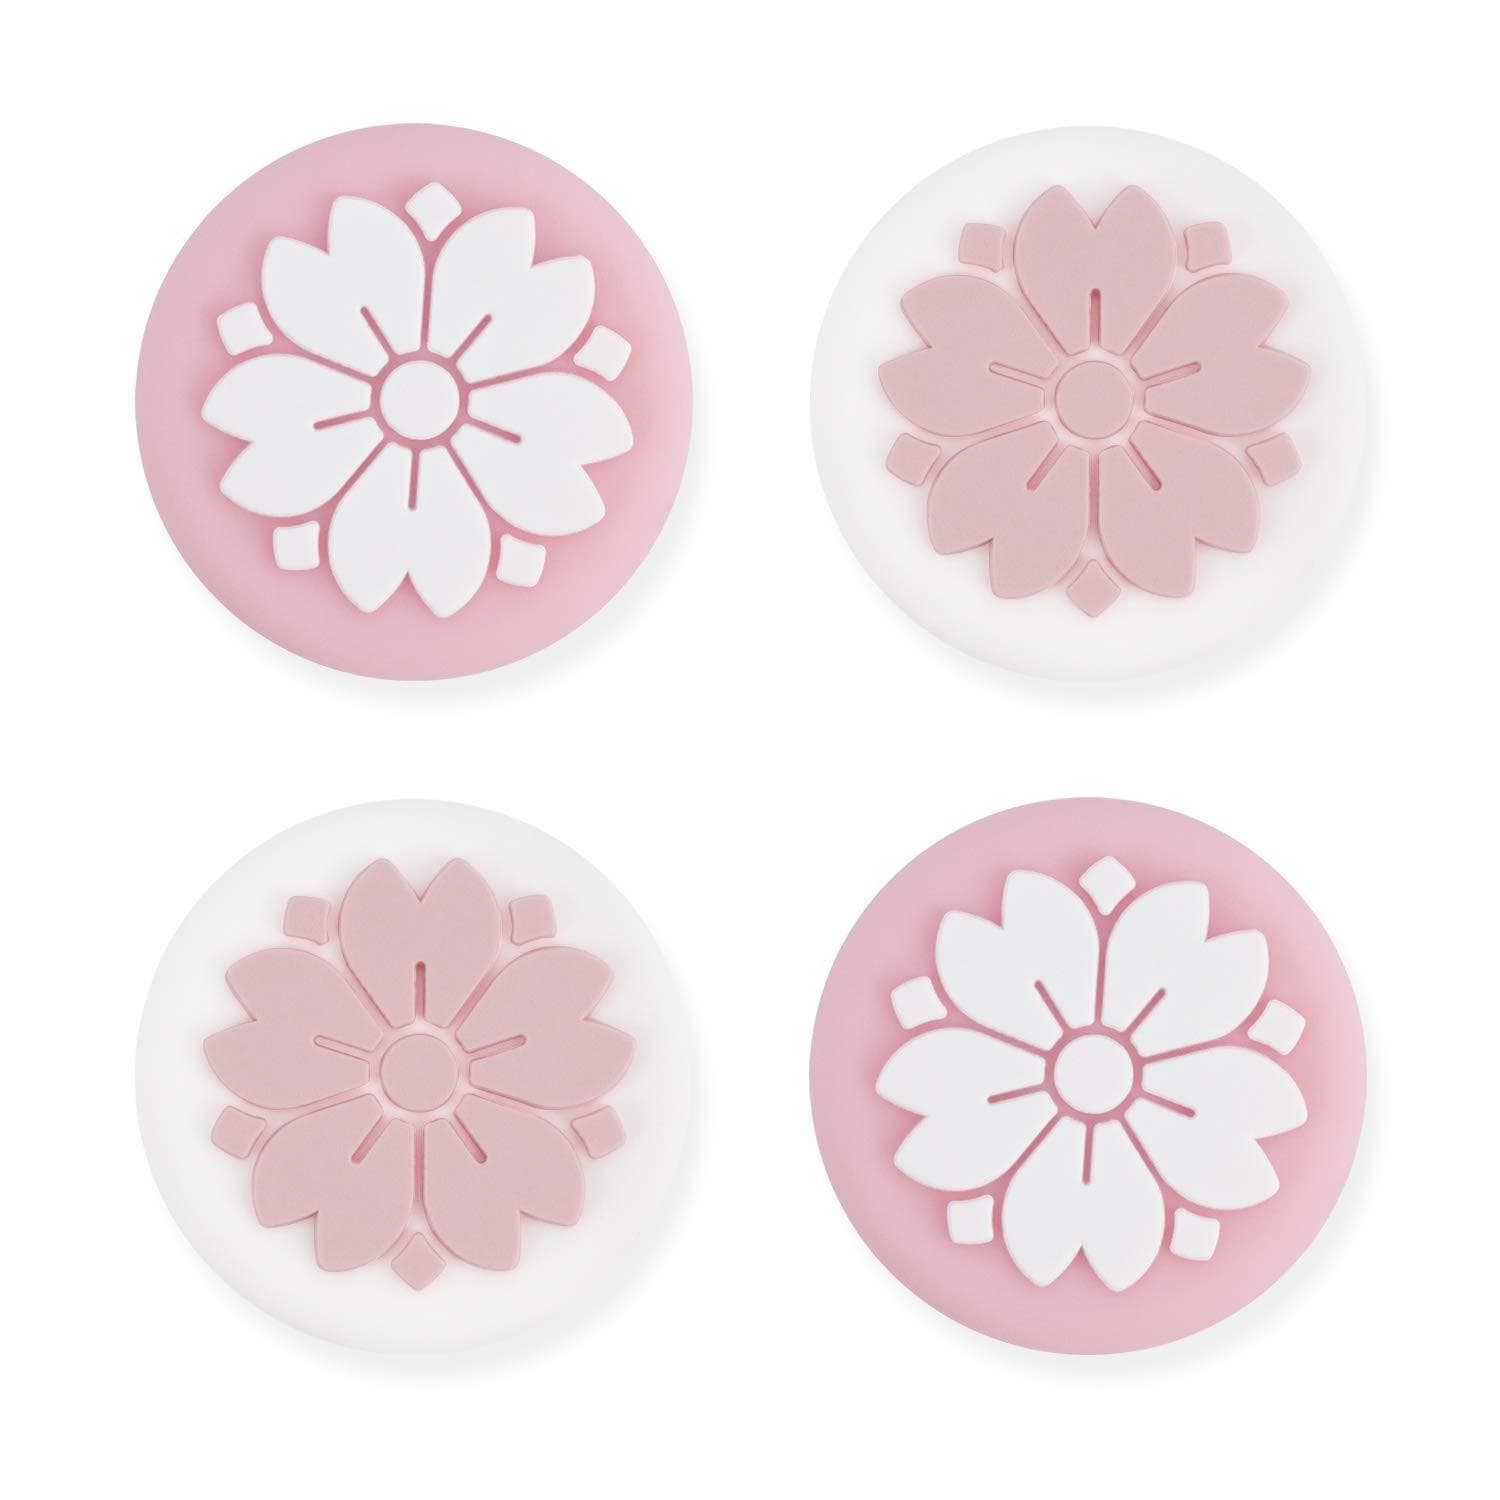 Sakura Flower Set Nintendo Switch Joy-Con Thumbcap Grips